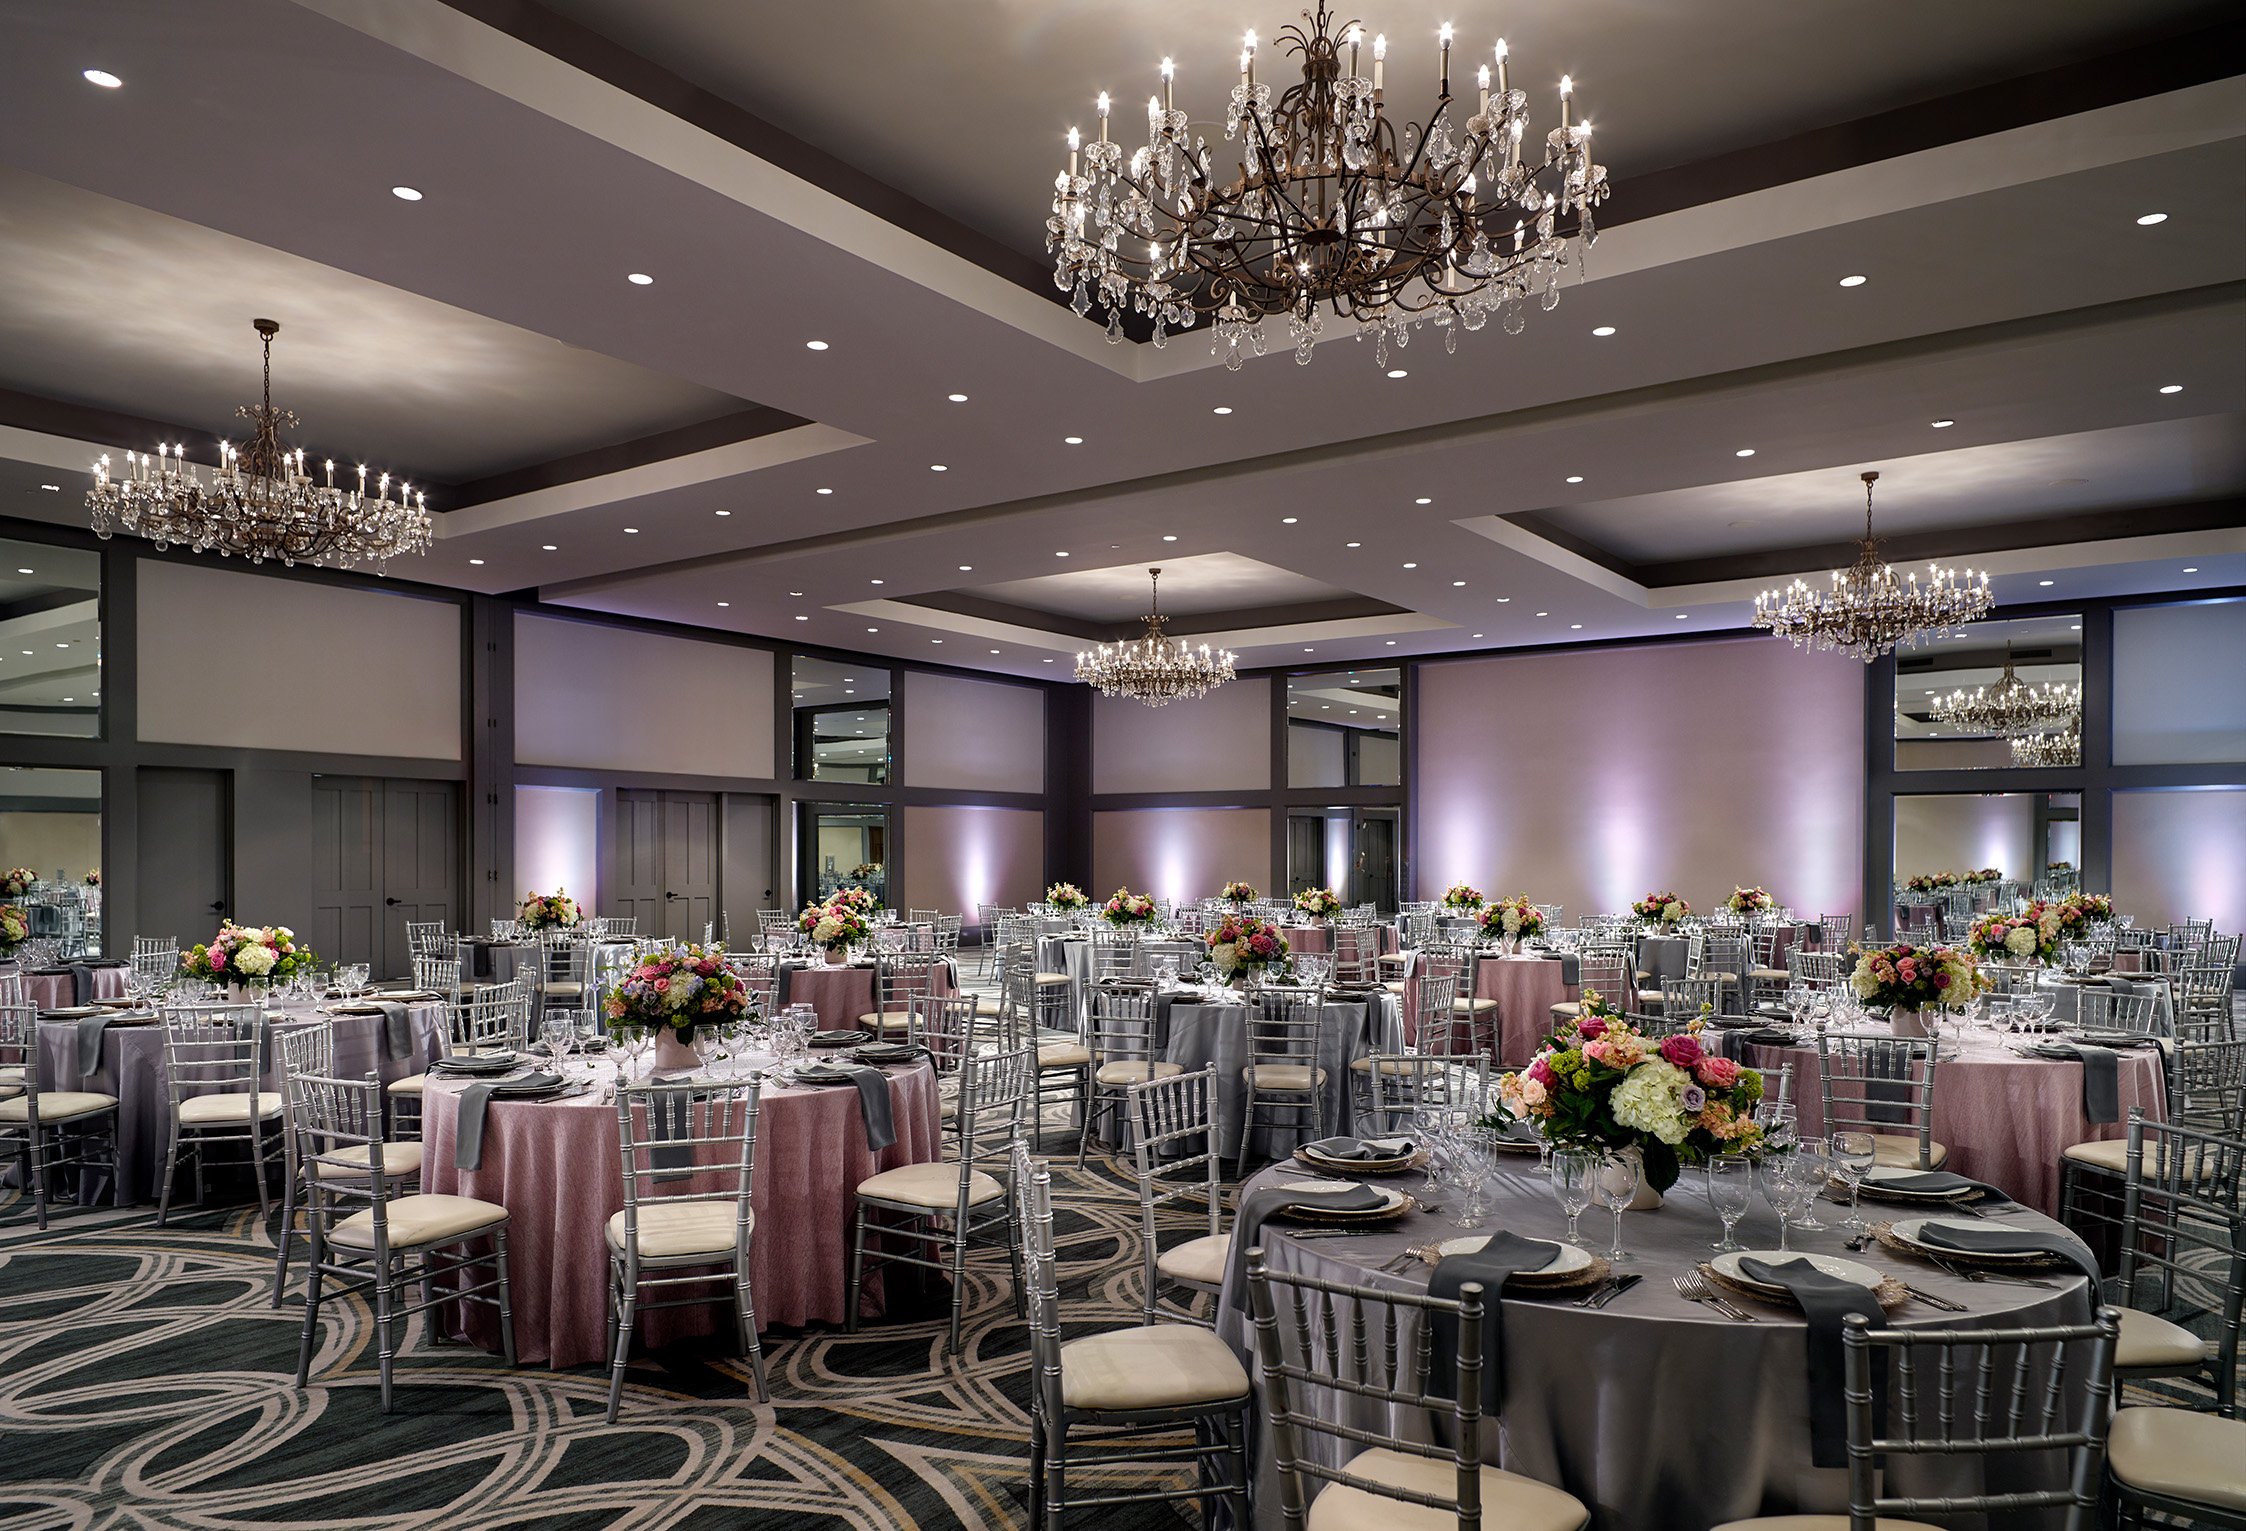 Premier Event Venue in Houston for Wedding, Corporate Events